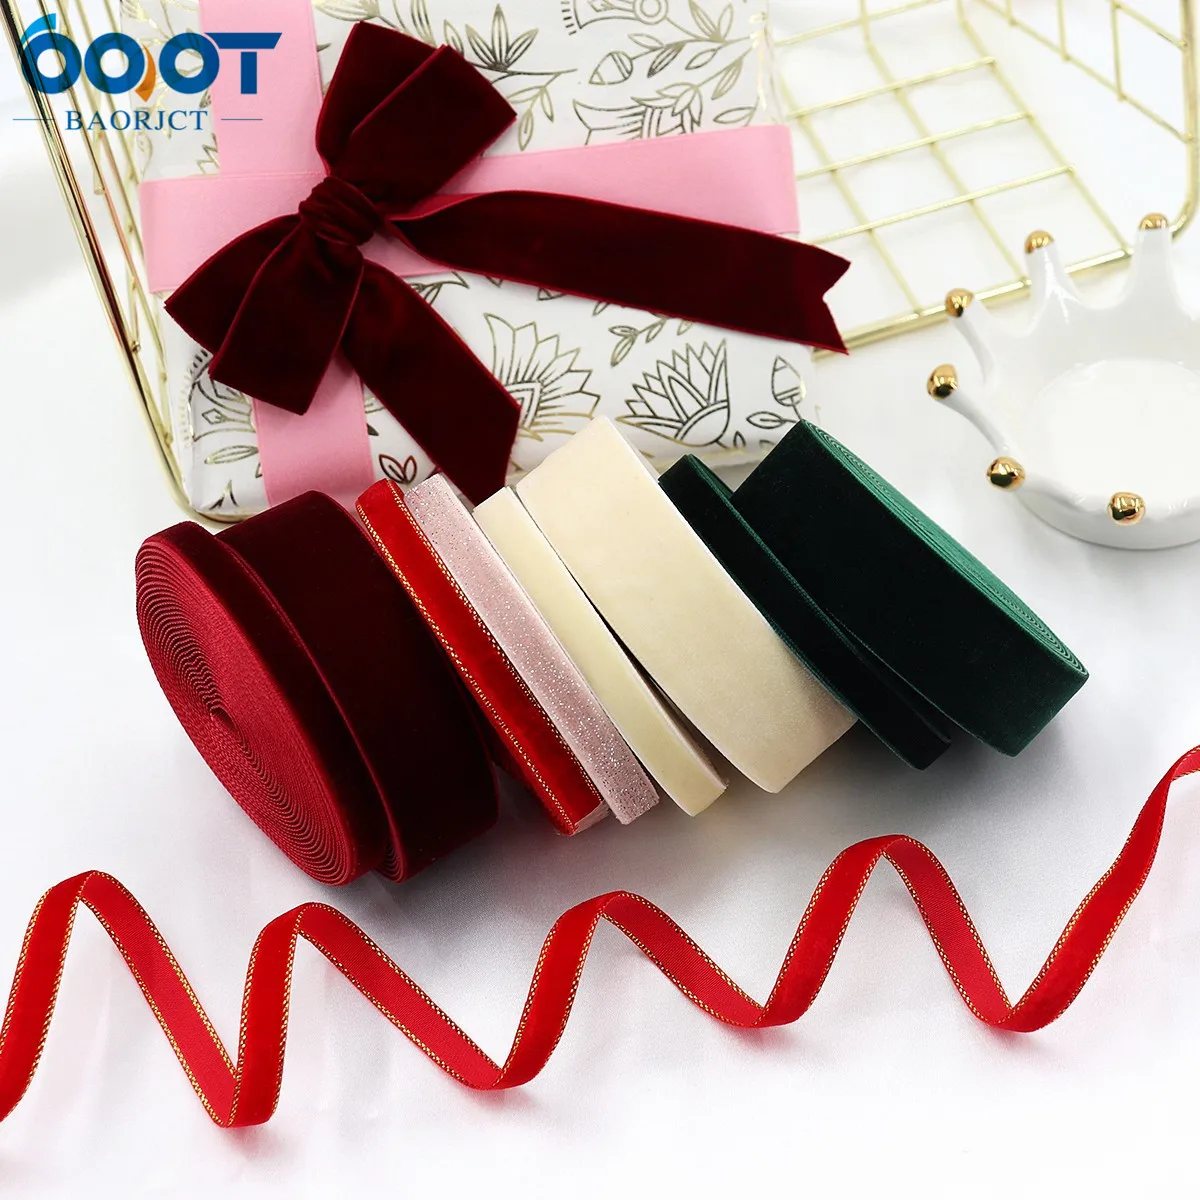 Wholesale Polyester Velvet Ribbon for Gift Packing and Festival Decoration  